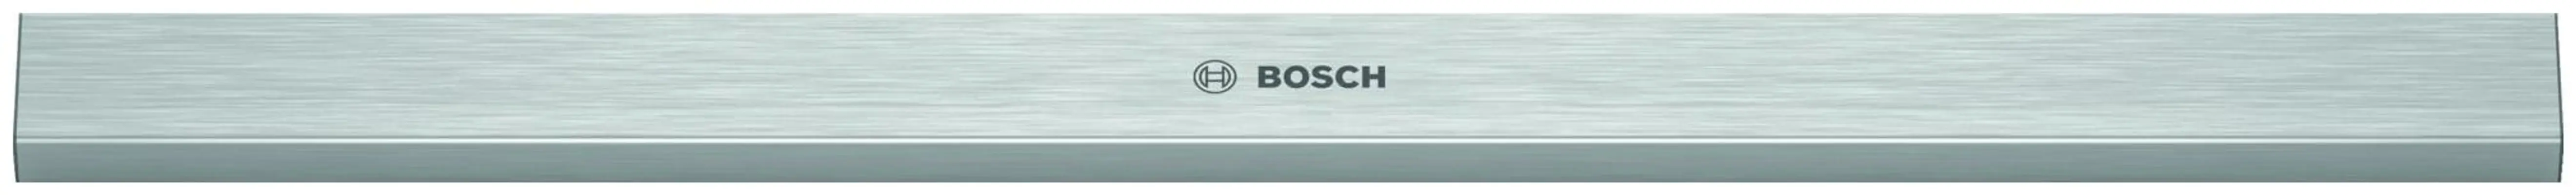 DSZ4685-Bosch-Afzuigkap-accessoires